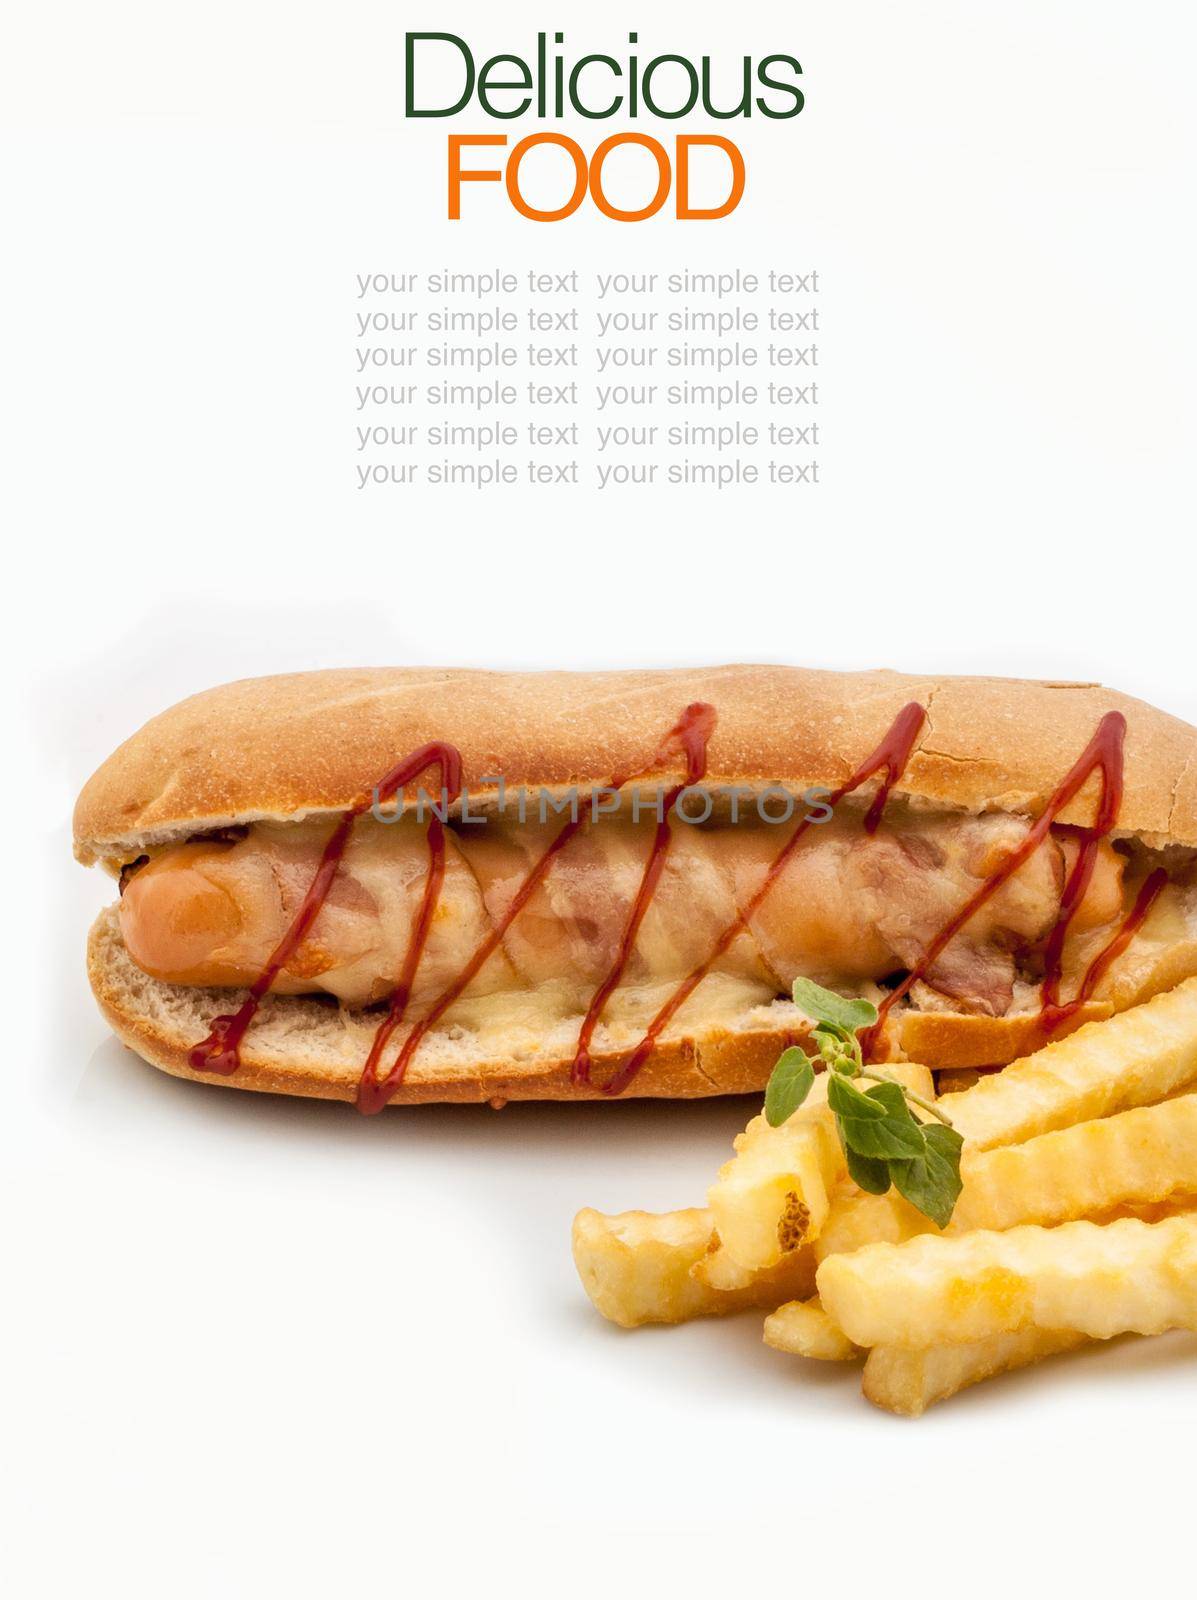 Tasty hot dog homemade style. by kerdkanno